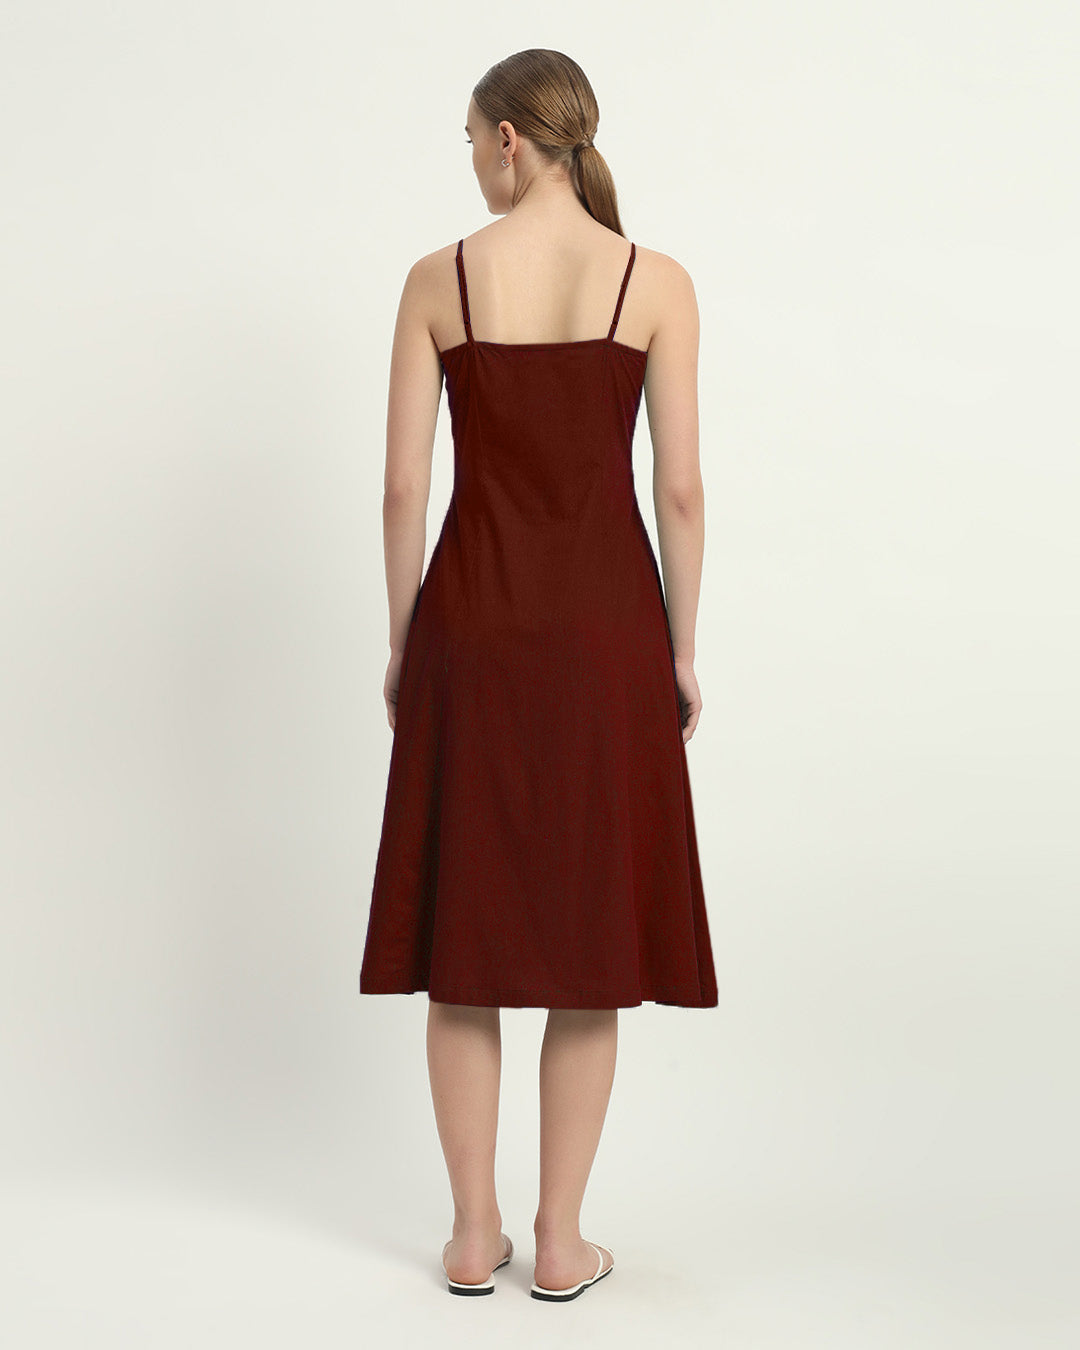 The Valatie Rouge Cotton Dress